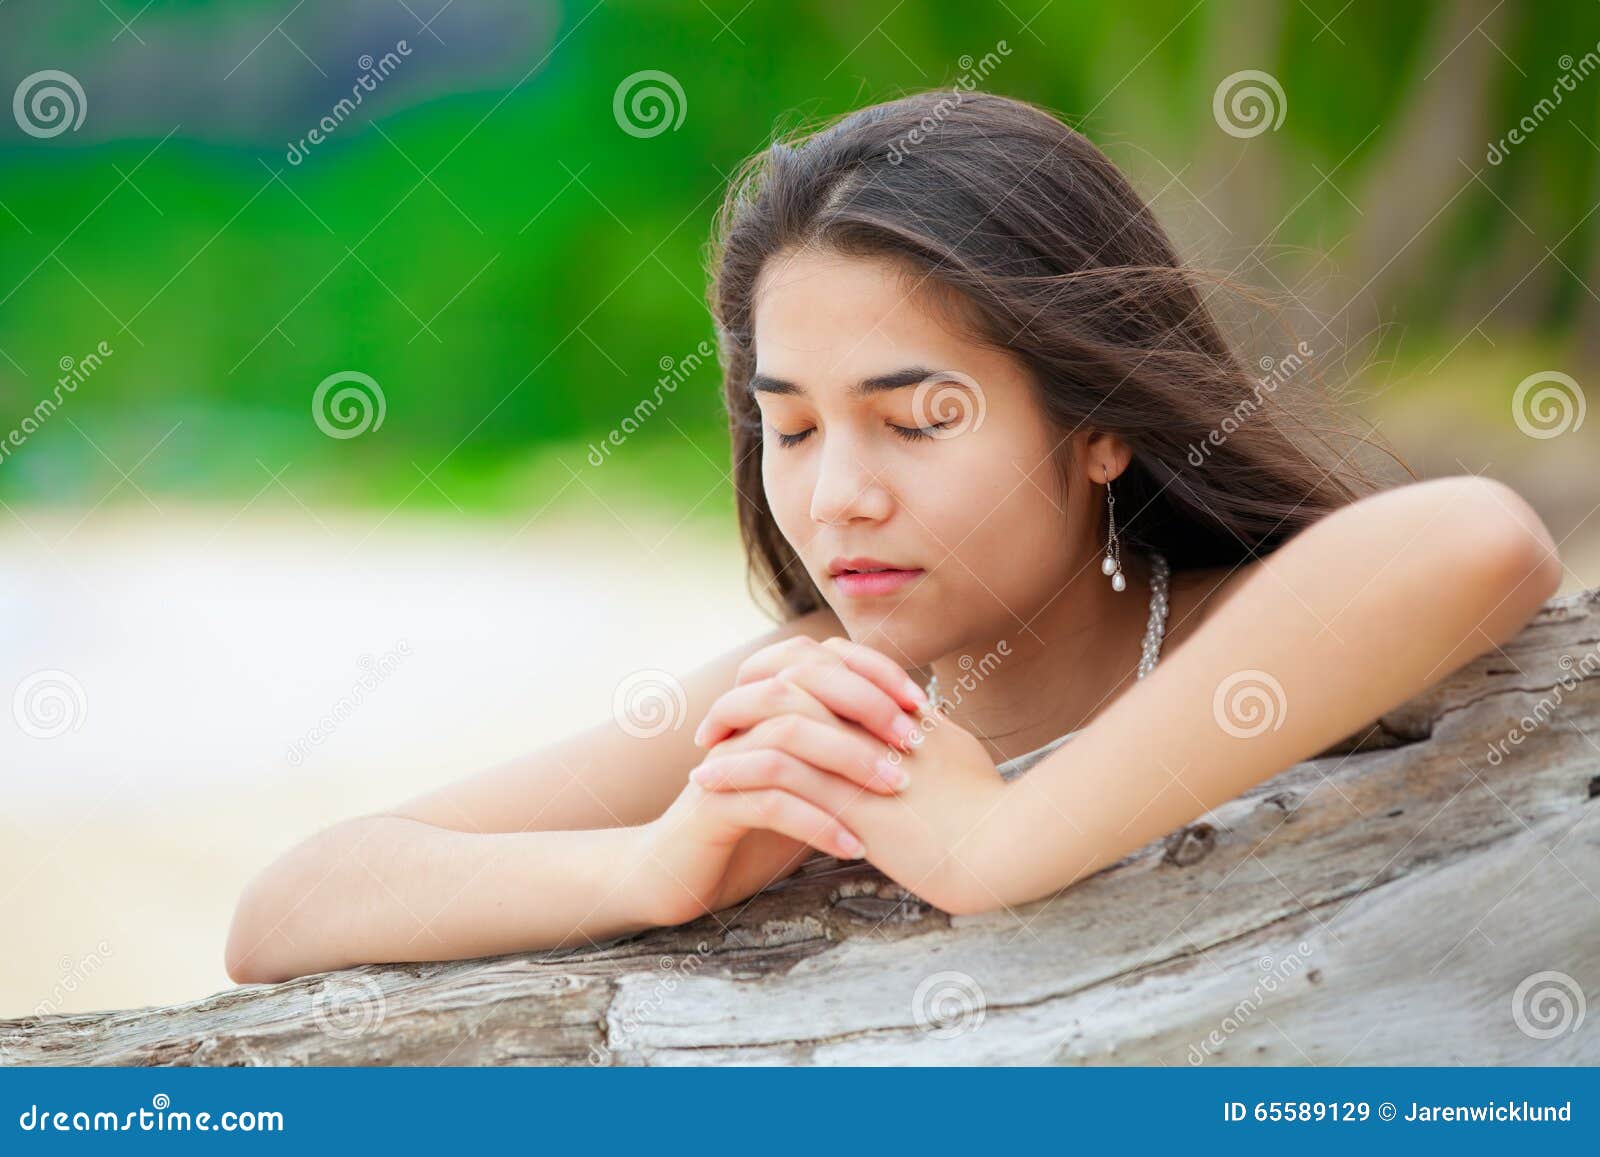 Women Praying On The Beach